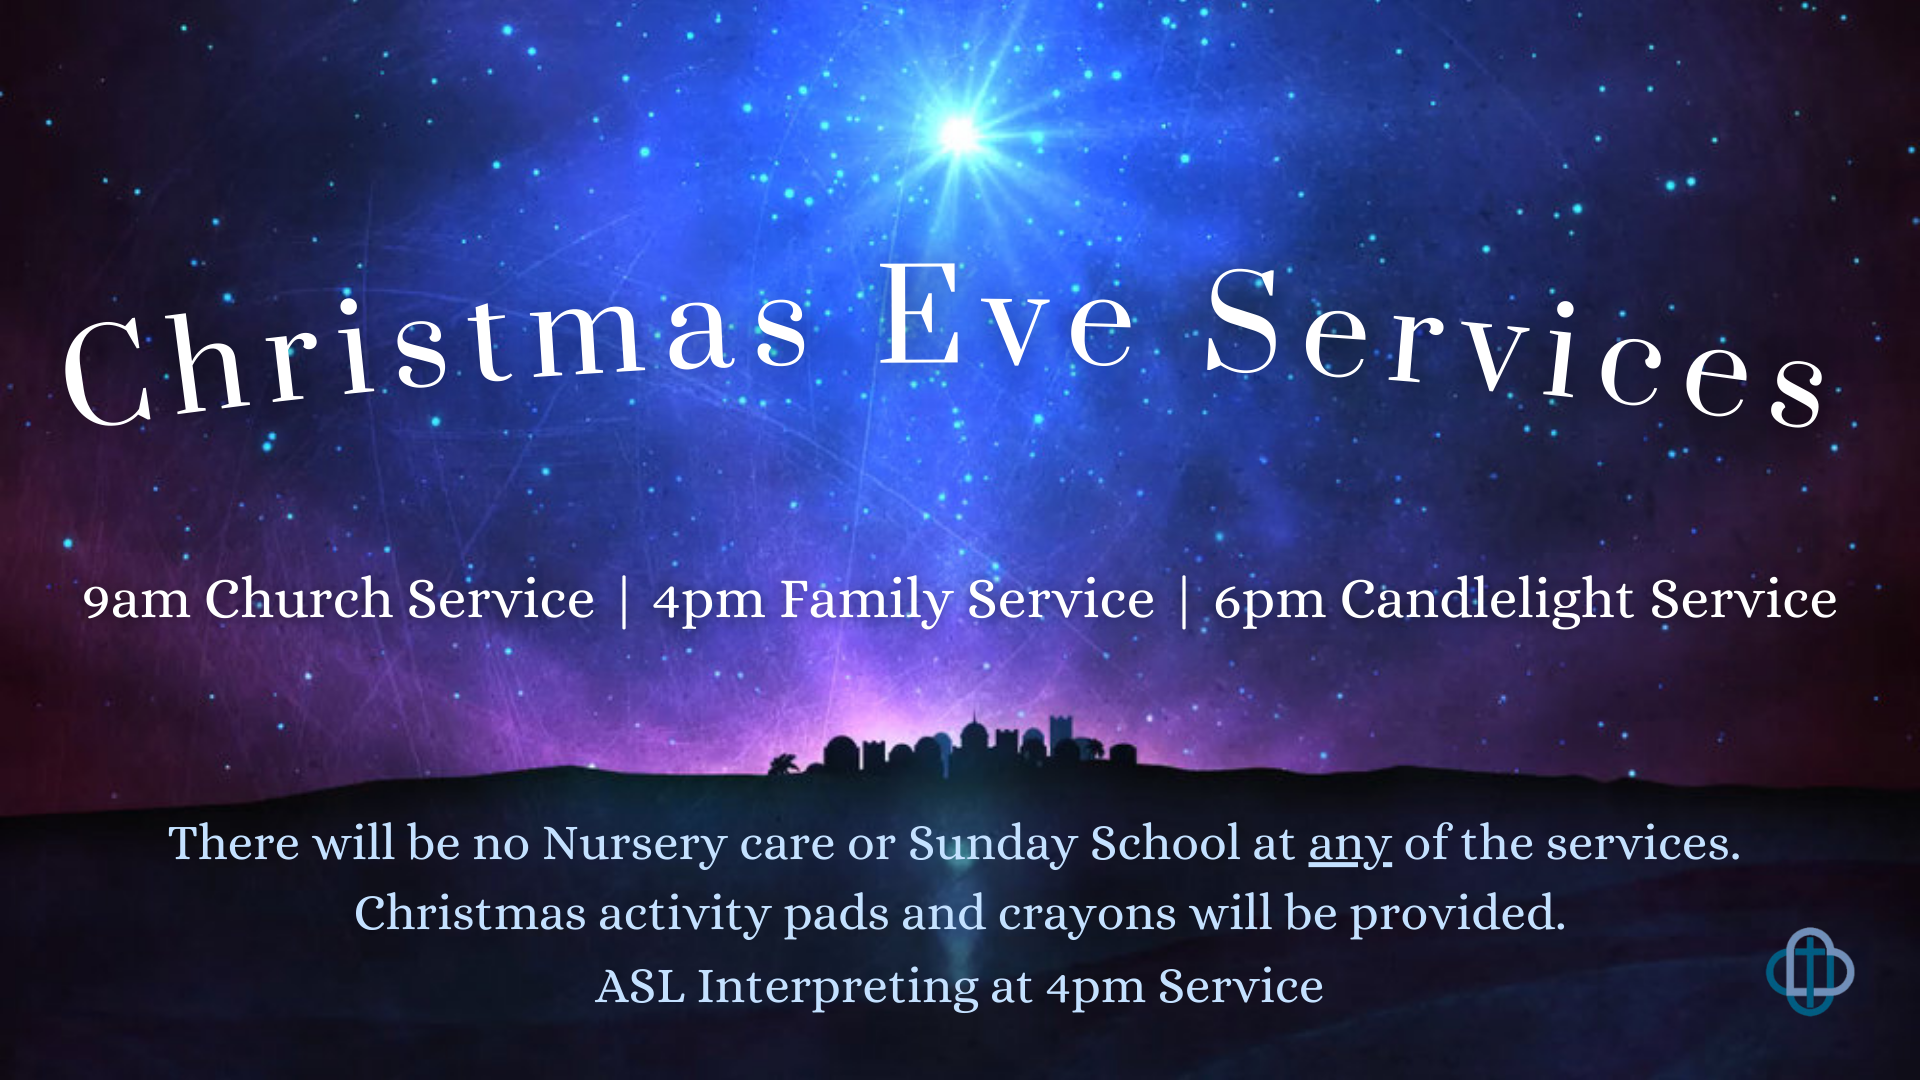 Christmas Eve Services at MPC – Moorpark Presbyterian Church